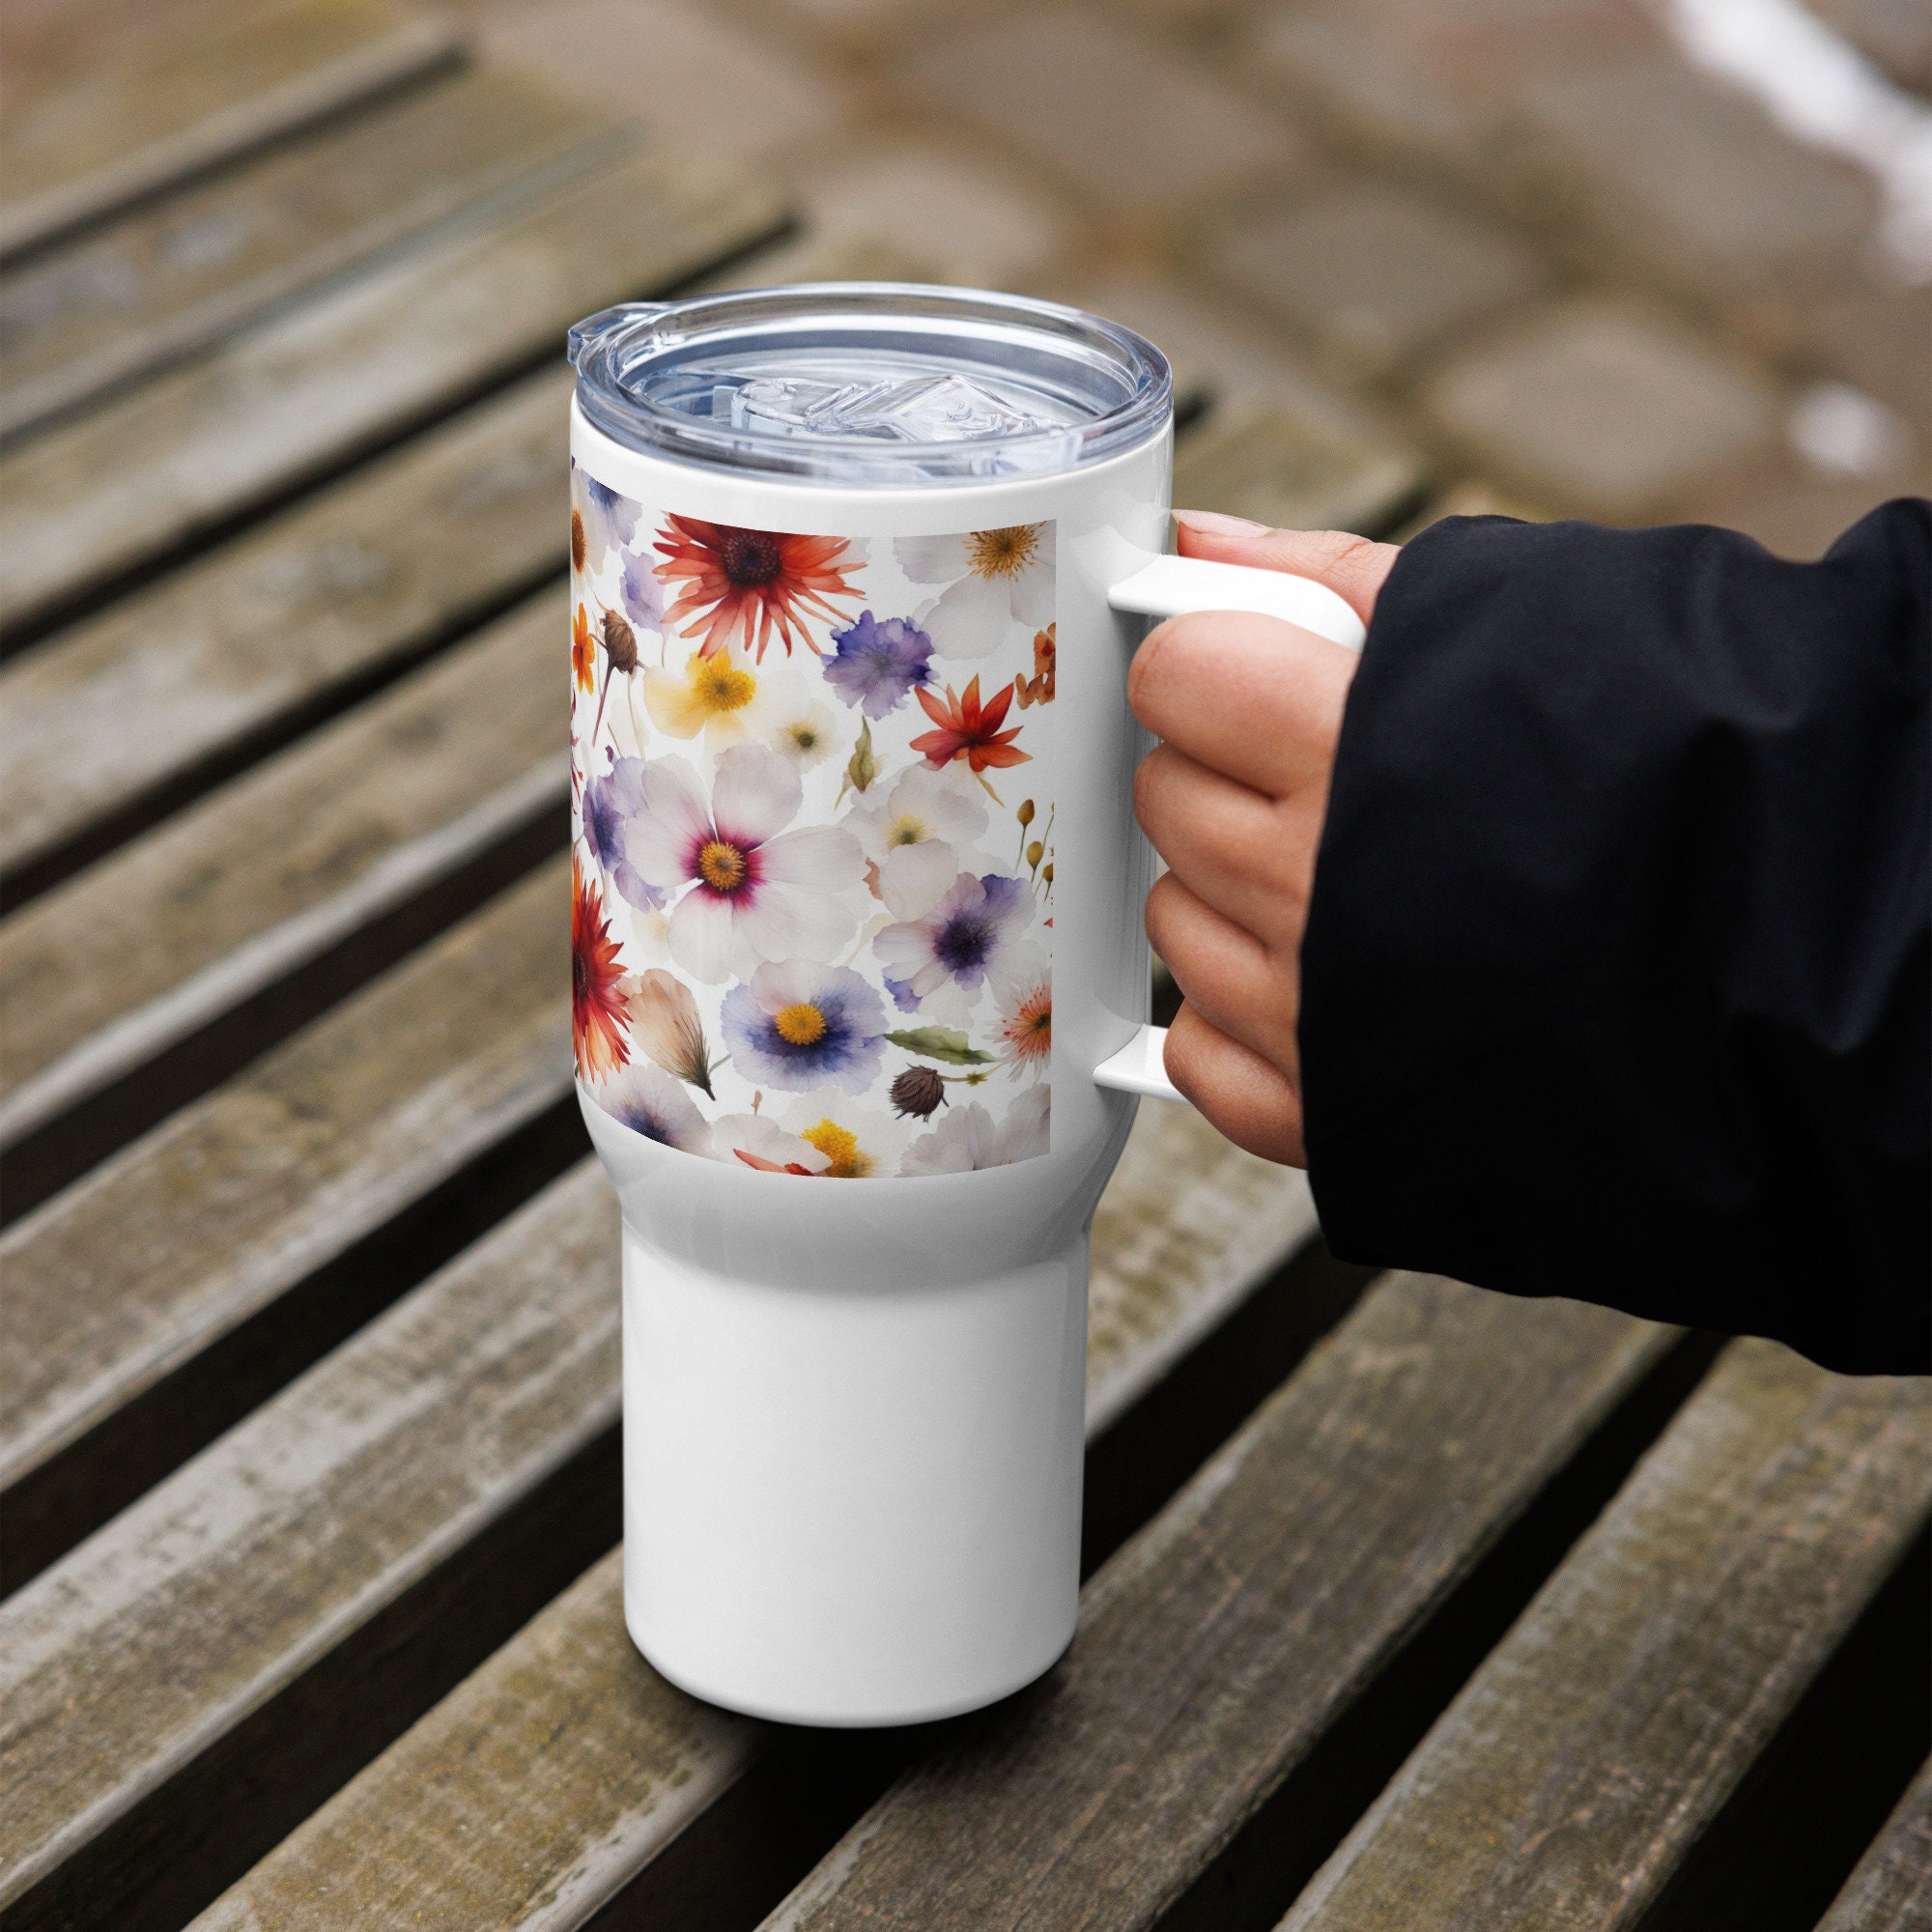 Personalized Floral Travel Coffee Mug, Design: M7